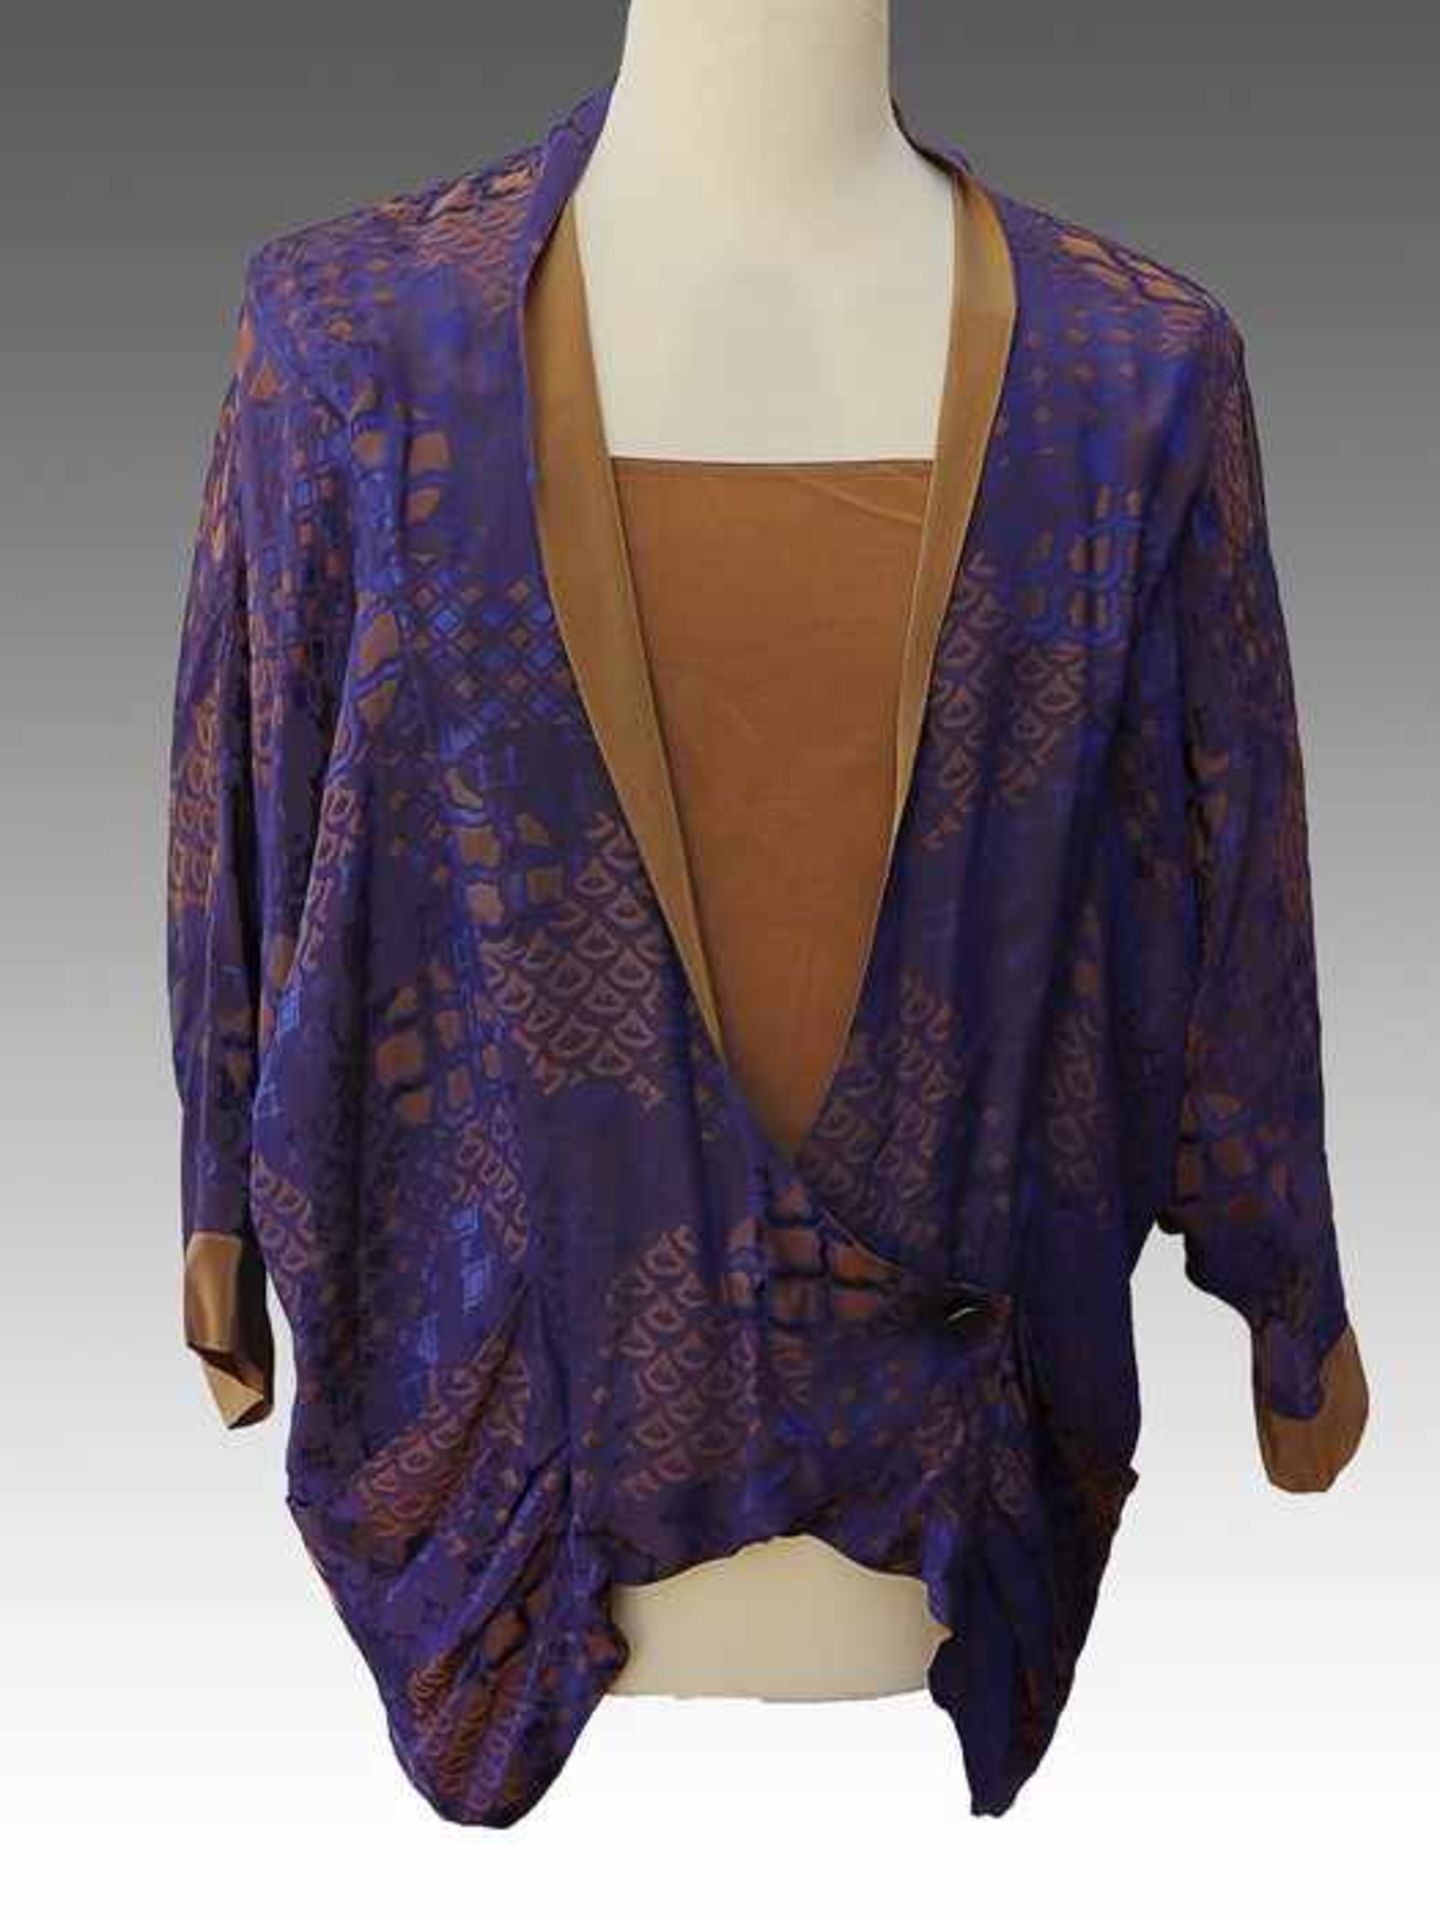 Tiffany exclusiv - Kostüm1980er J., Vintage, 1 Rock, 1 Weste, 1 Blusenjacke, lila changierend,